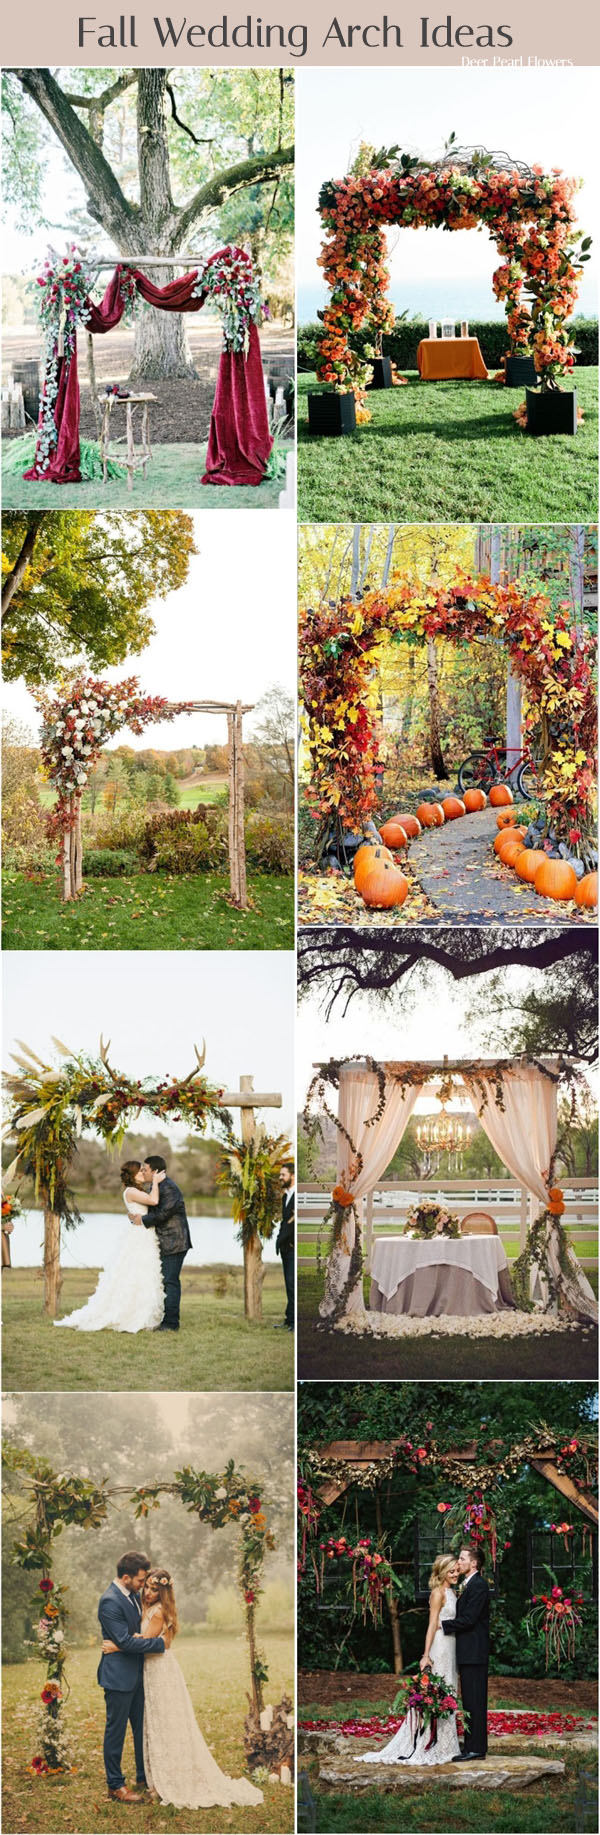 Fall wedding arch and alter decor ideas